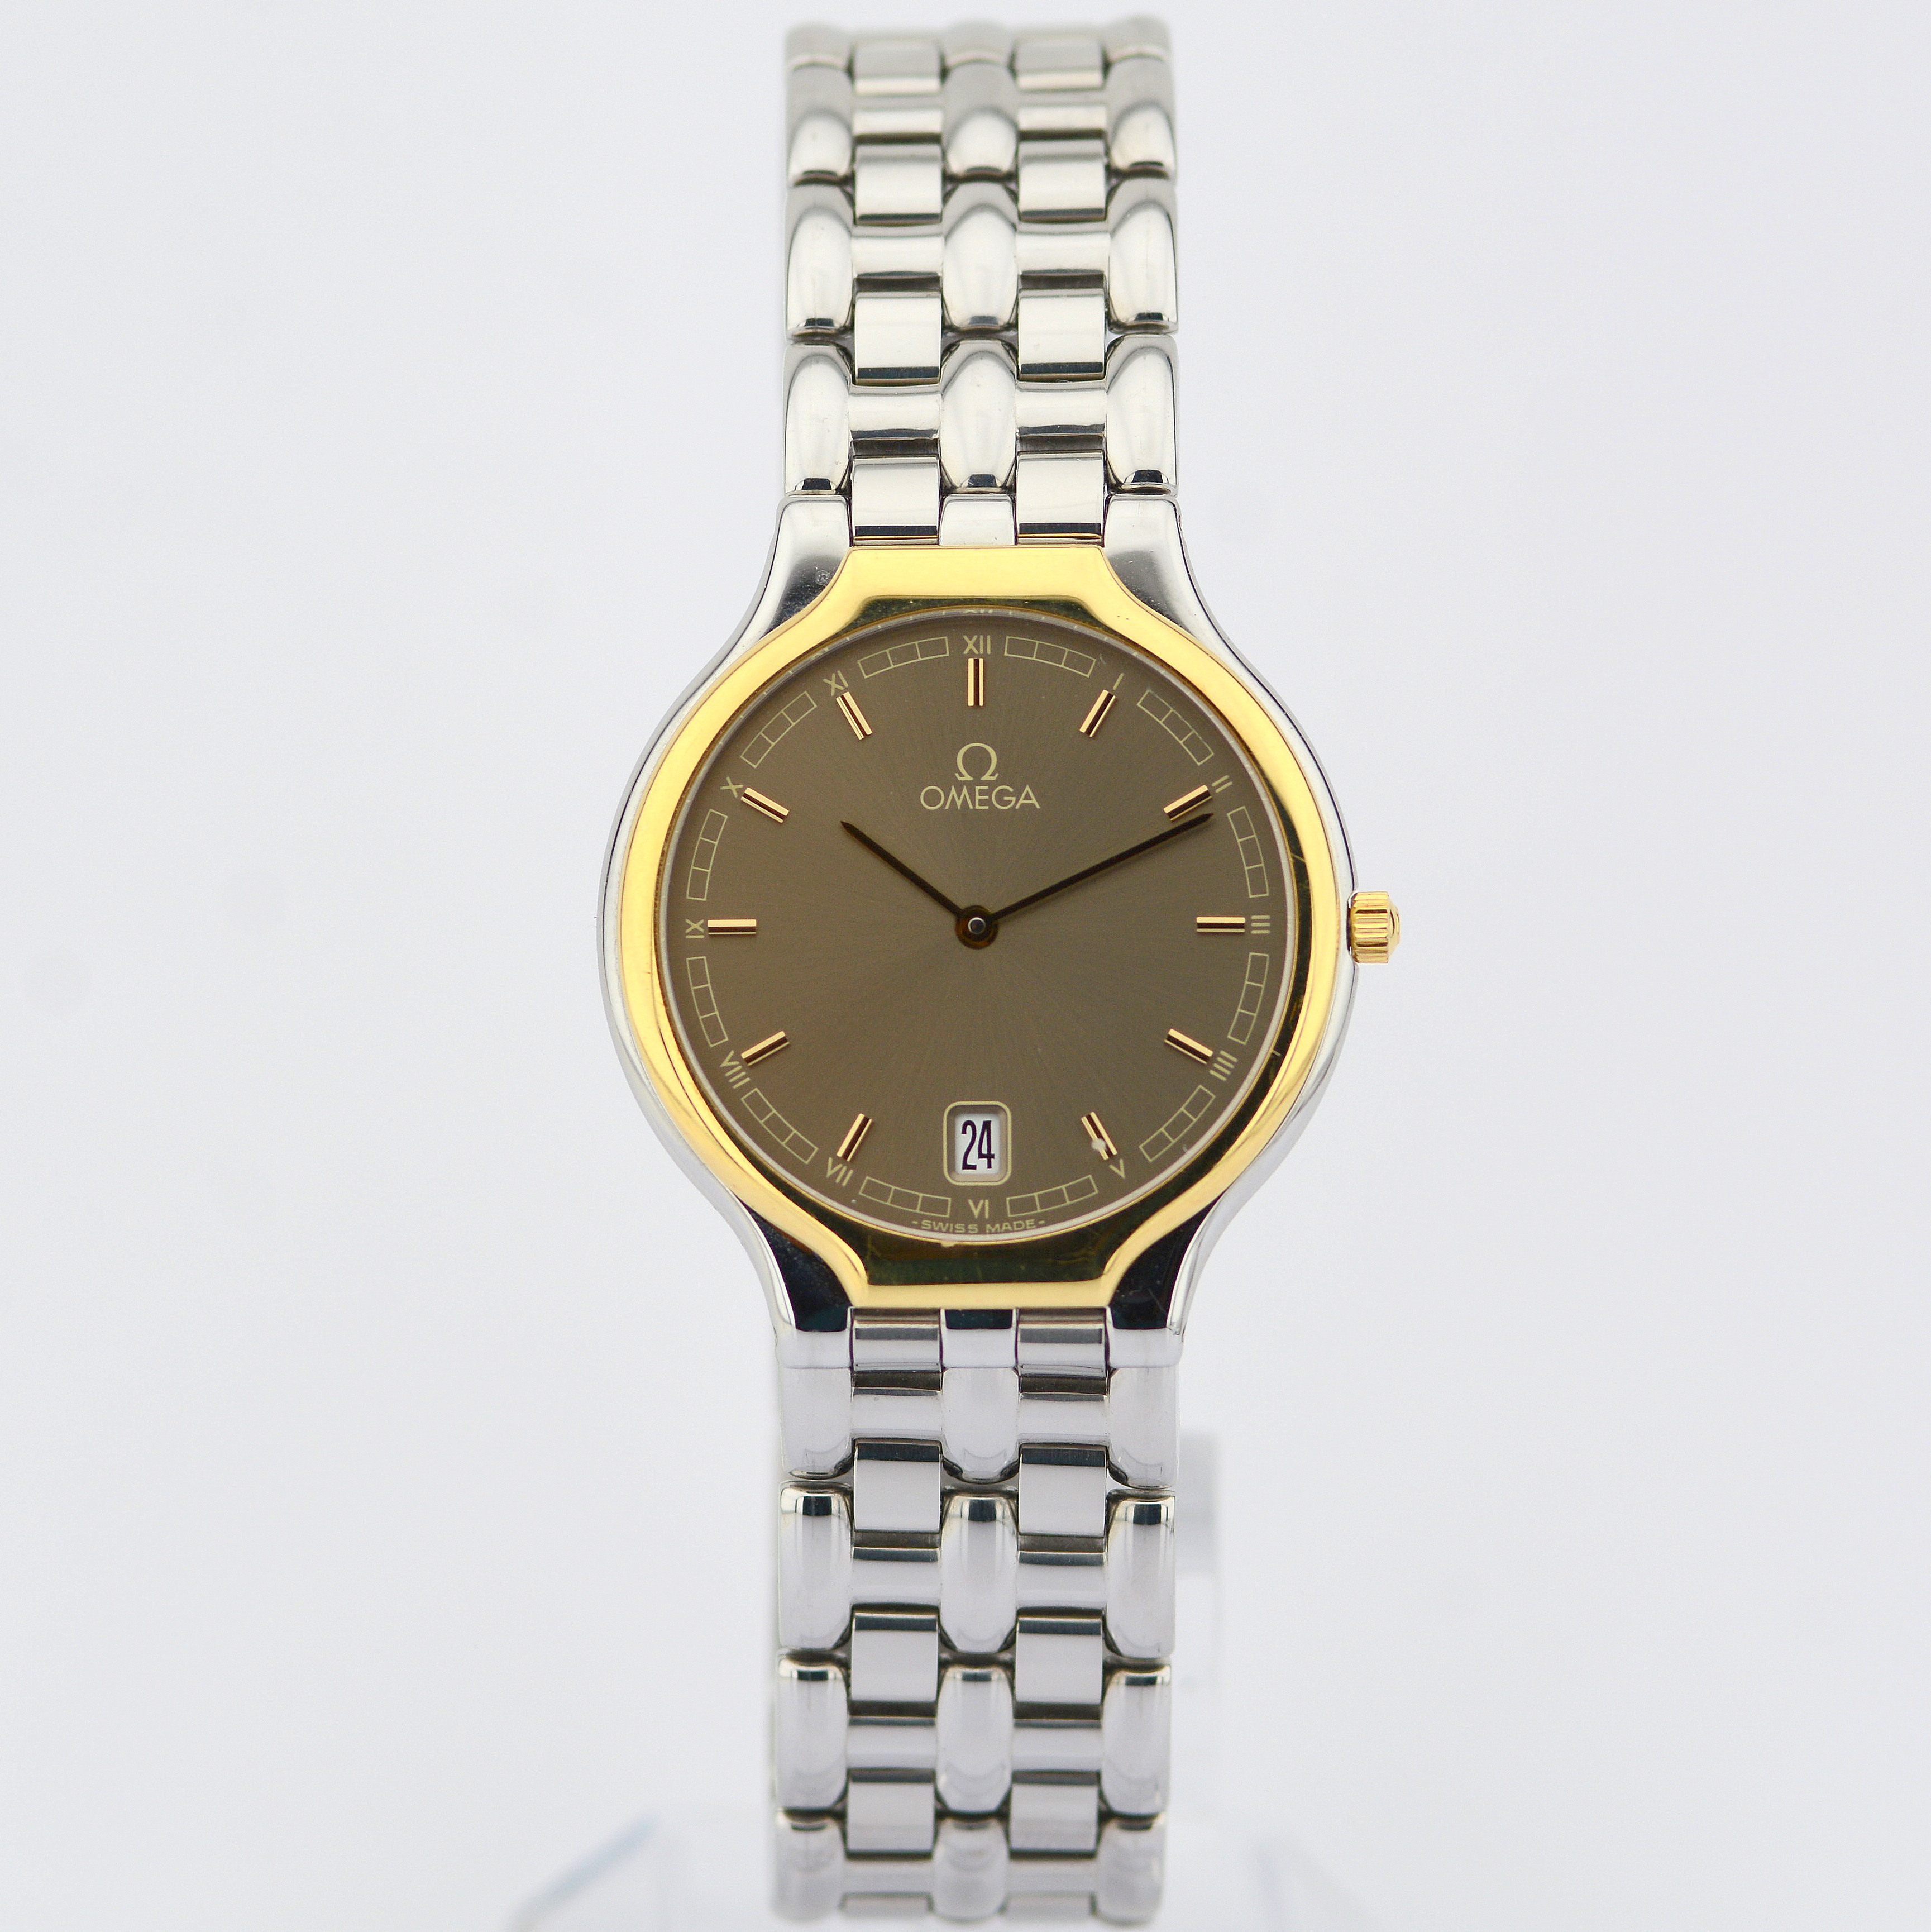 Omega / De Ville Symbol 18K Yellow gold Date - UNWORN - Gentlmen's Gold/Steel Wrist Watch - Image 2 of 6